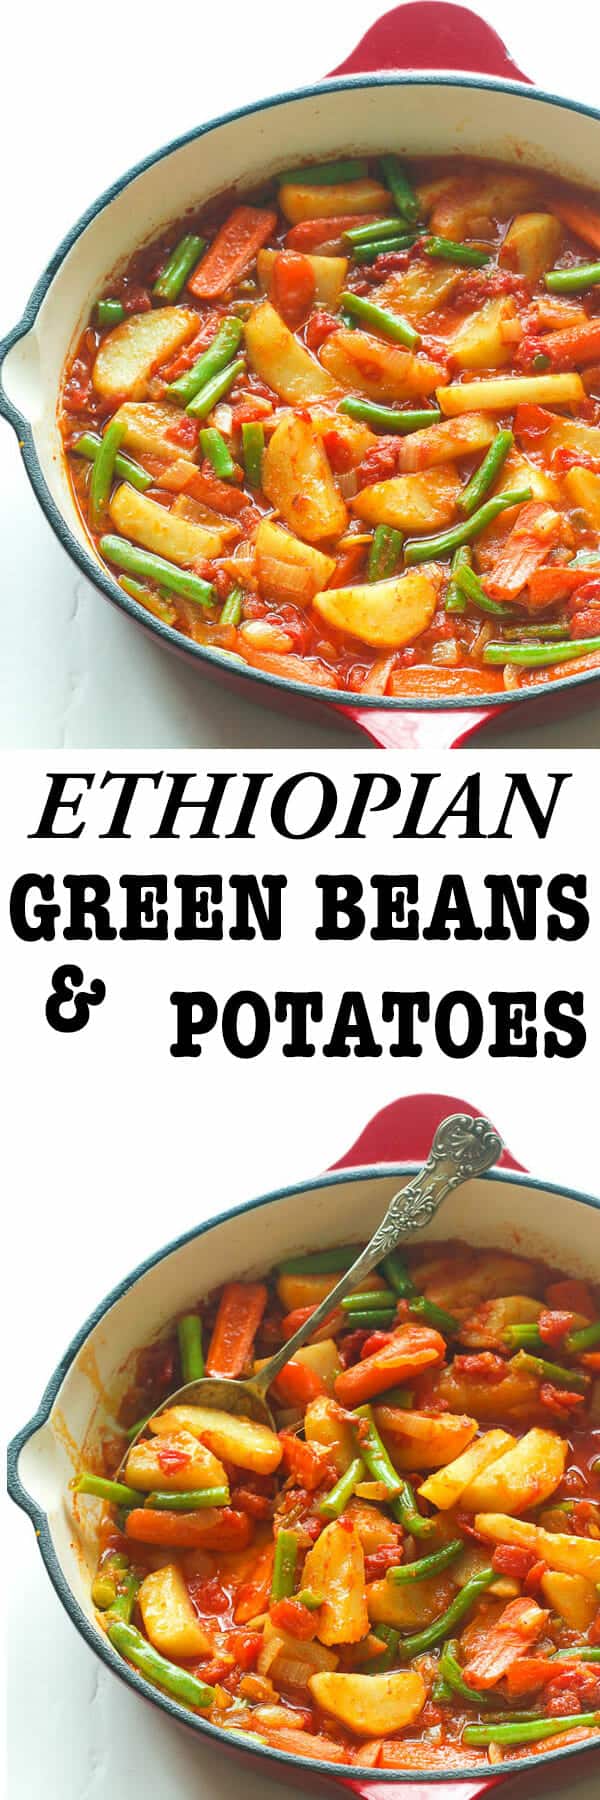 ETHIOPIAN-GREEN-BEANS-AND-POTATOES